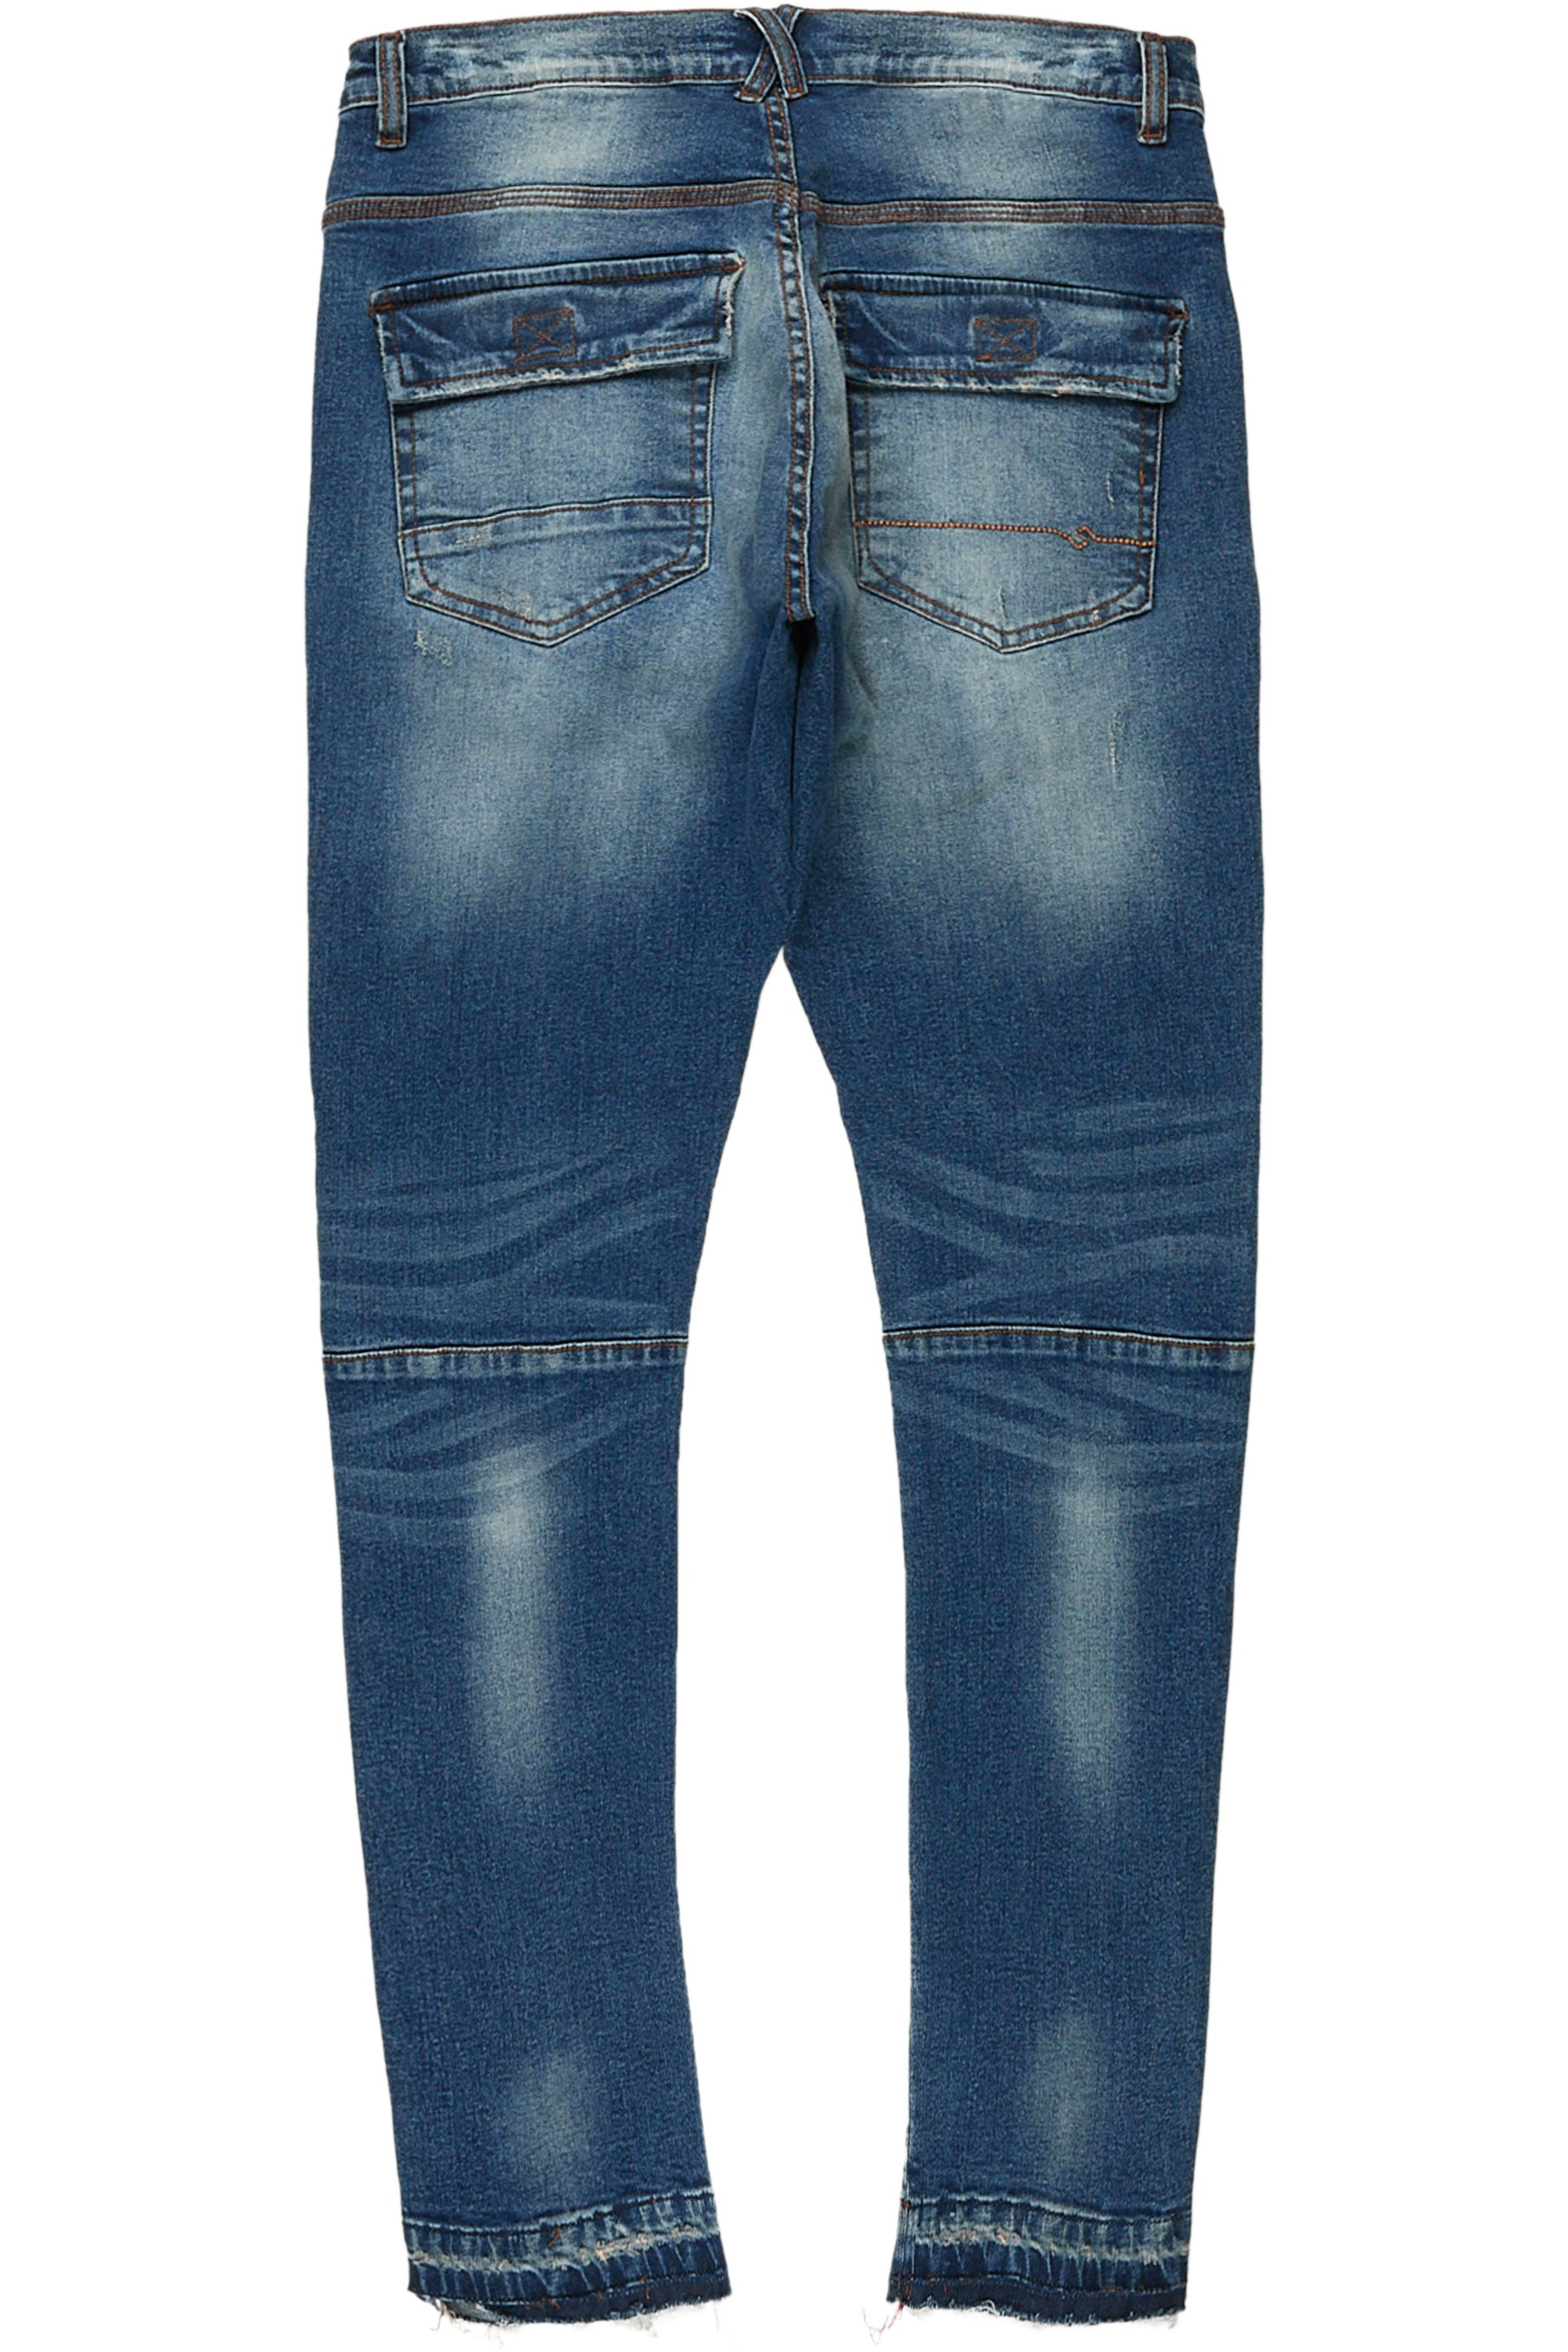 Kaipo Dark Blue Pocket Jean